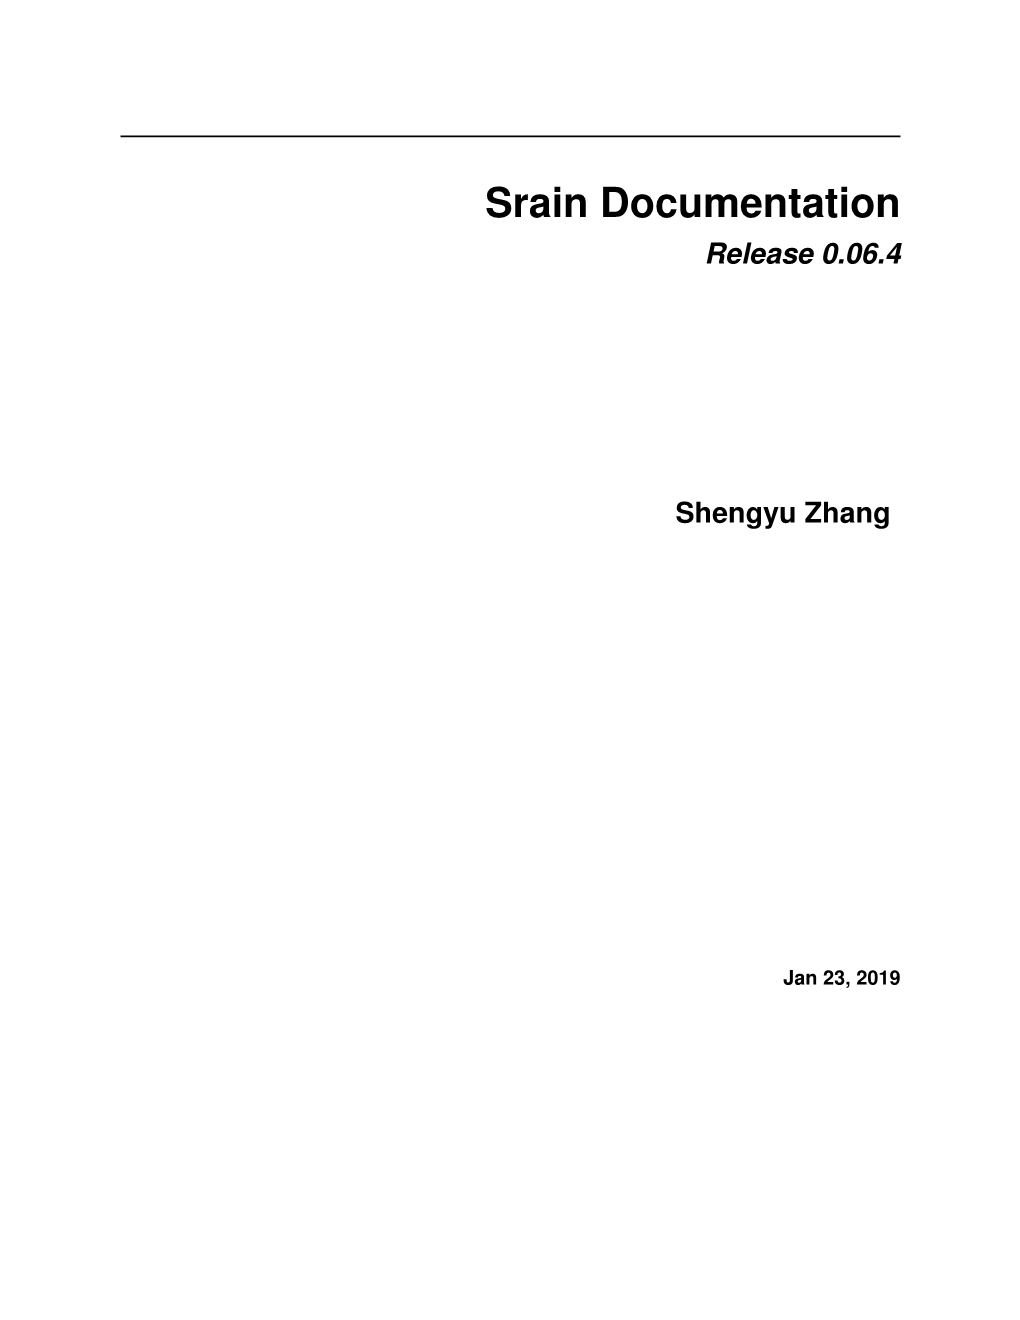 Srain Documentation Release 0.06.4